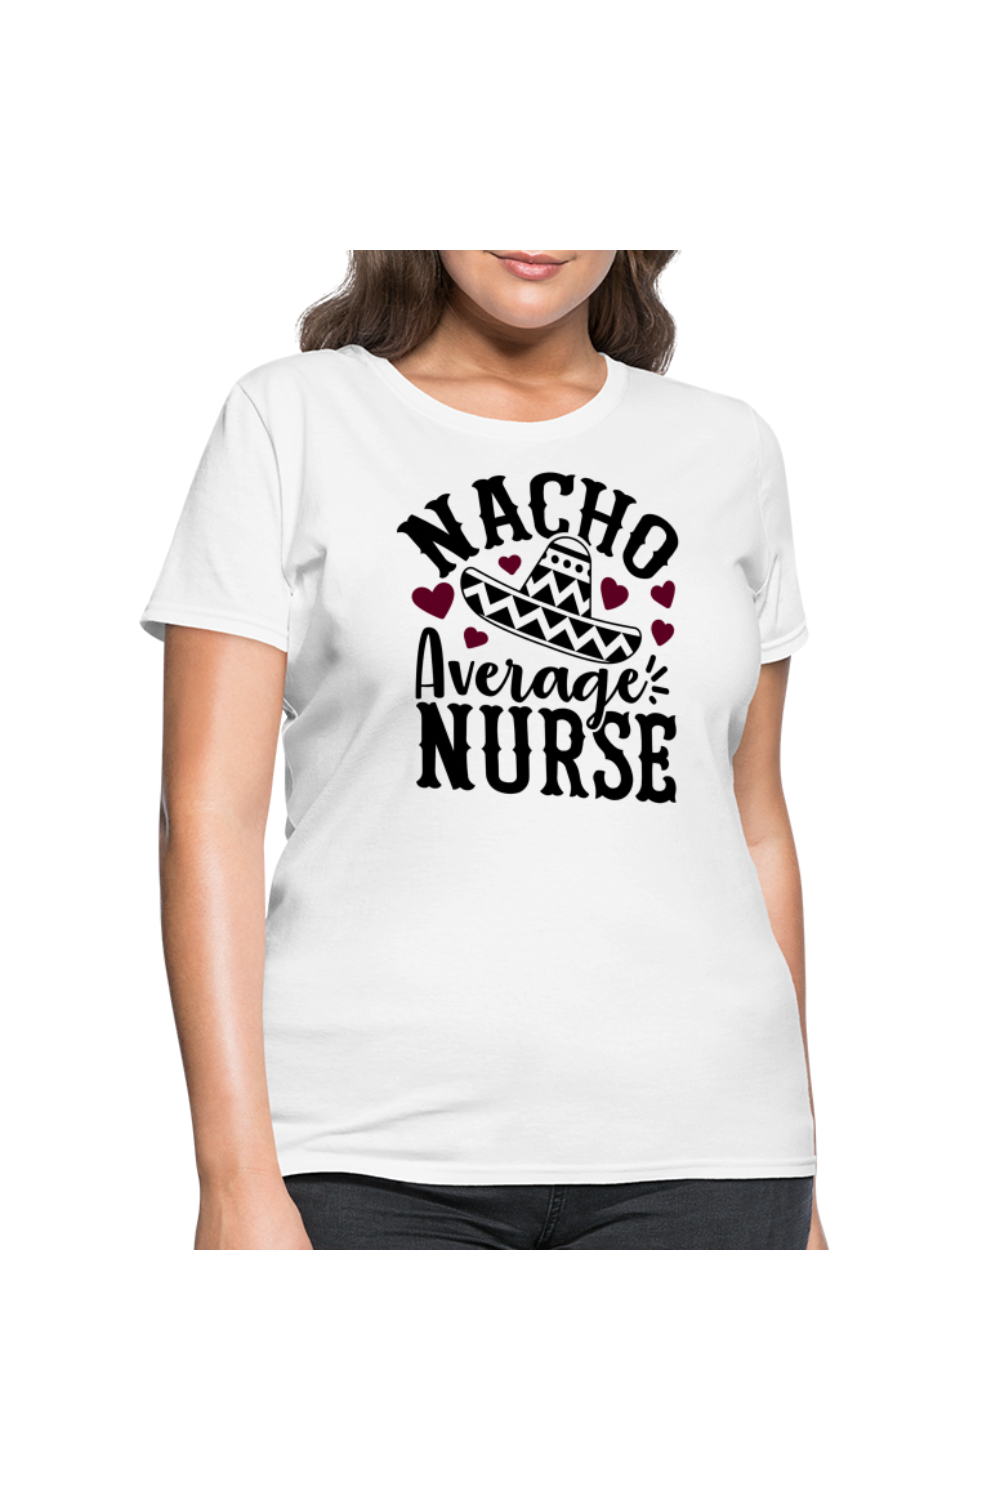 Nacho Average Nurse Women's Nurse T-Shirt - white